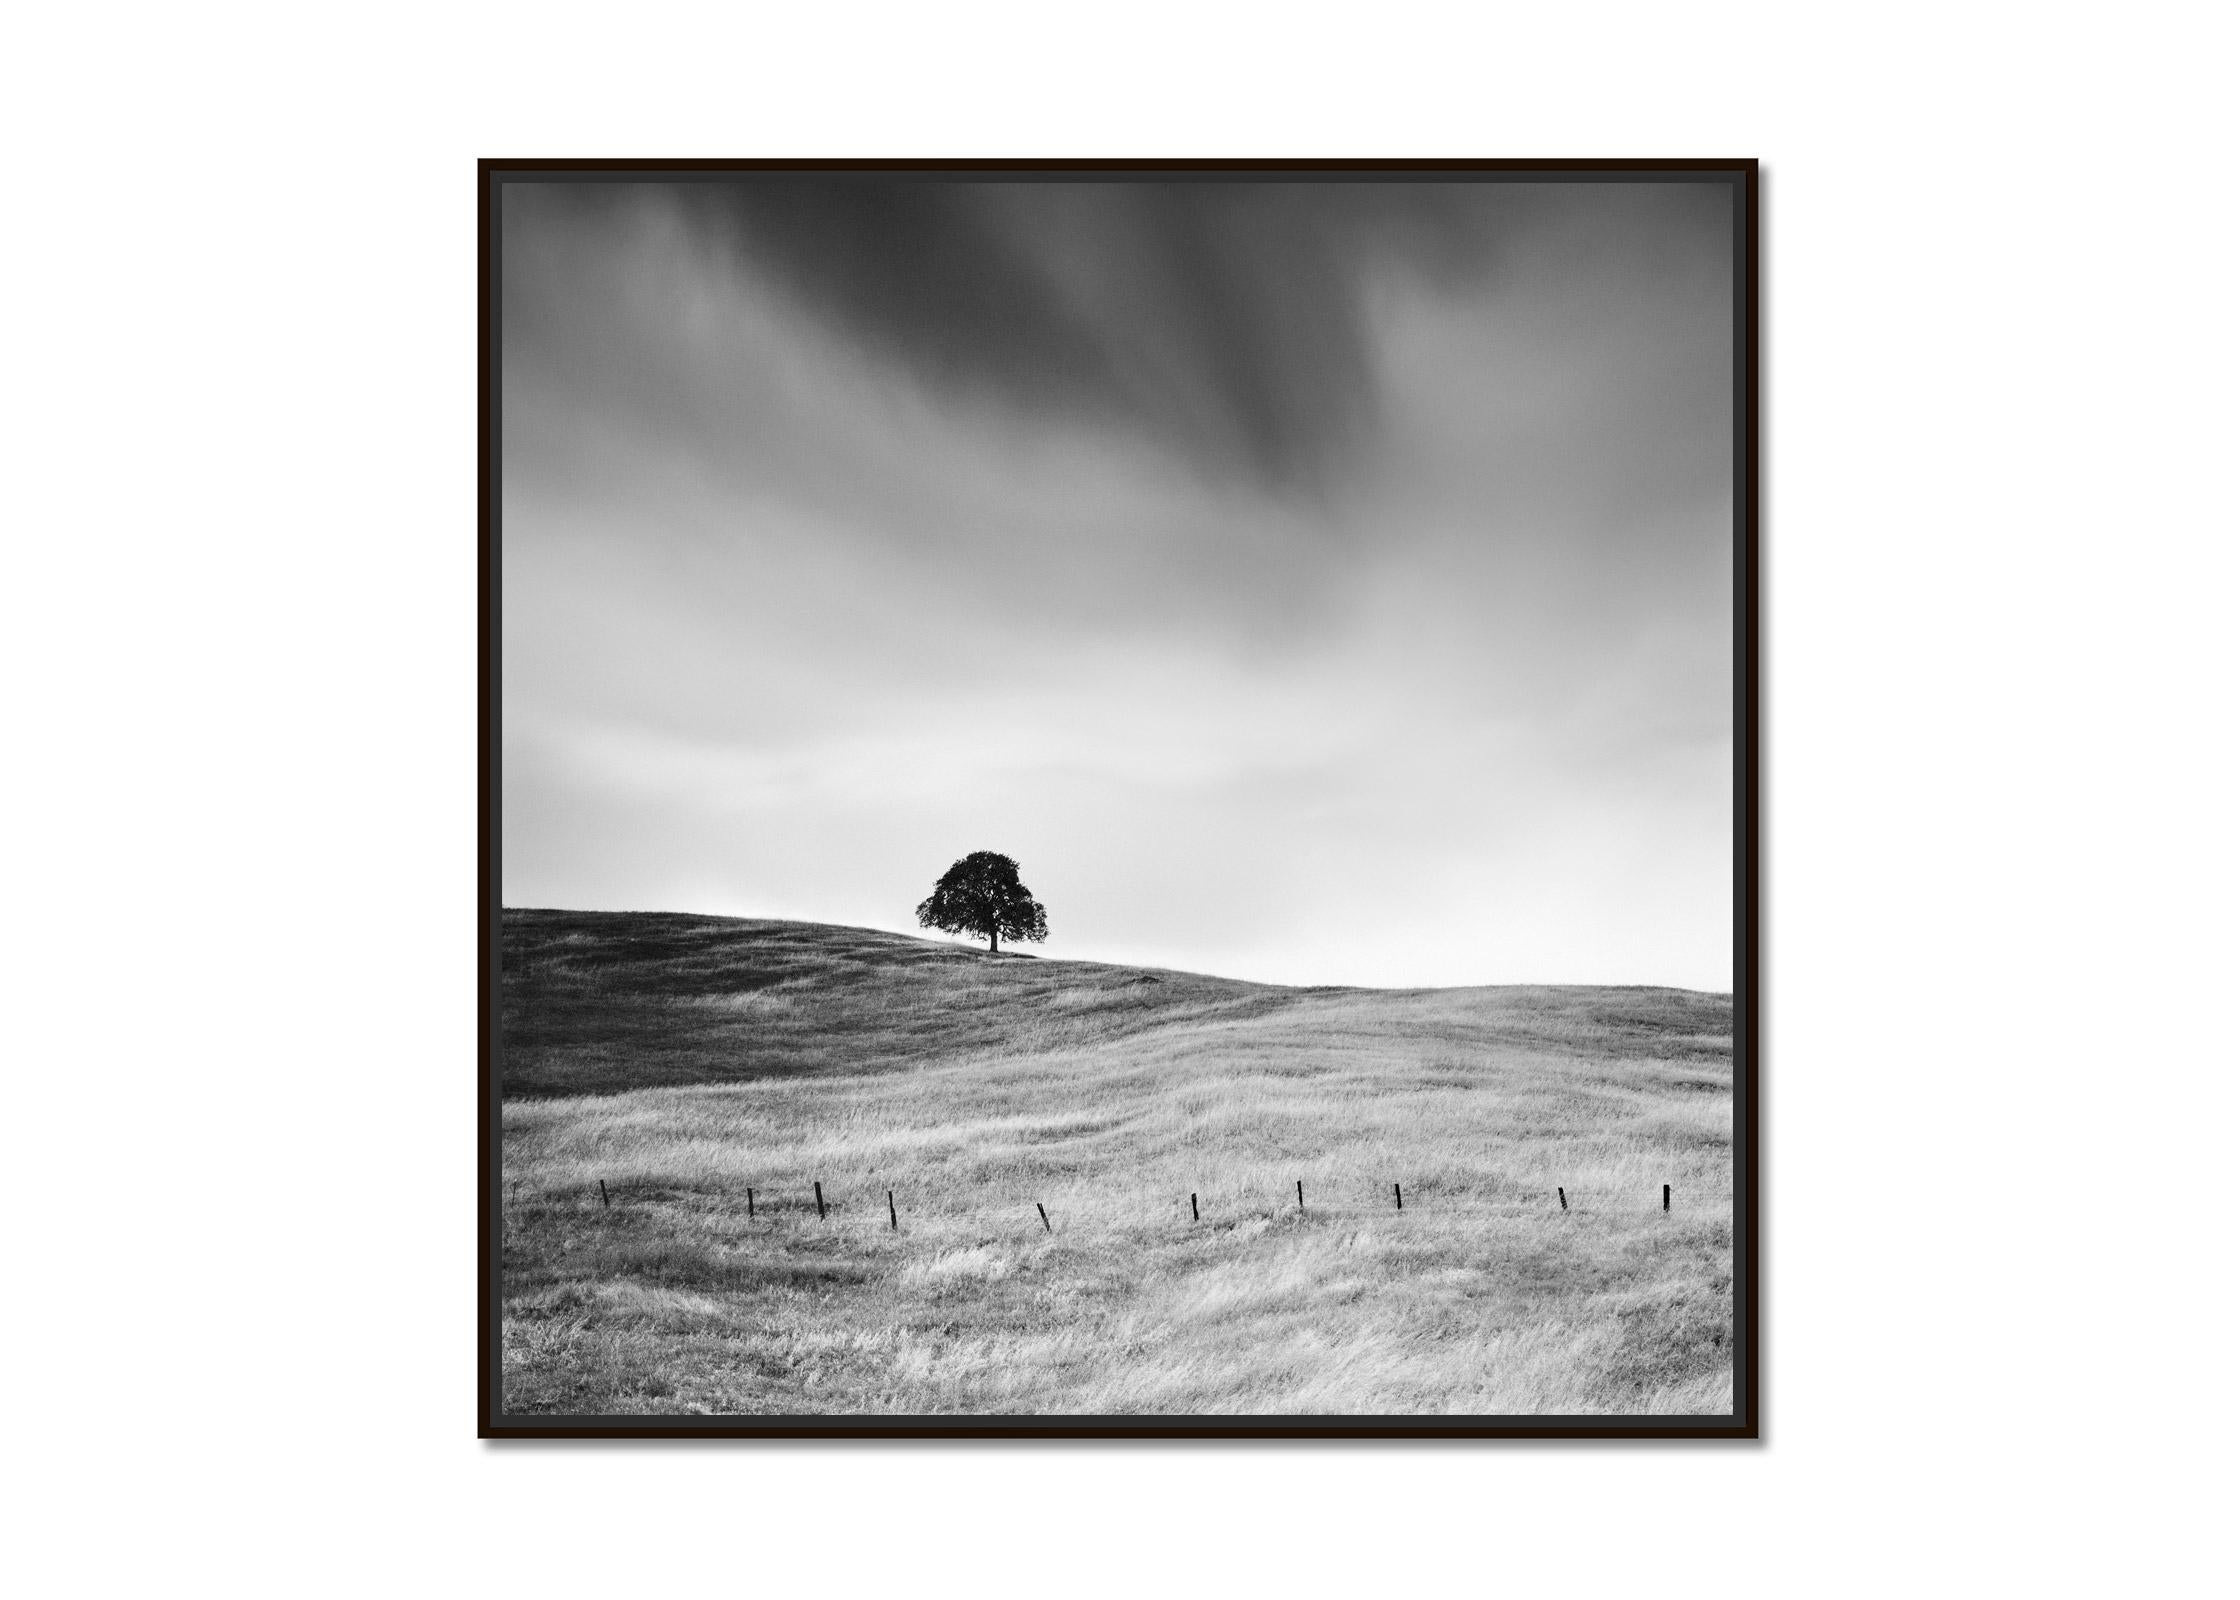 The tree in the golden grass California USA black white art landscape photography - Photograph de Gerald Berghammer